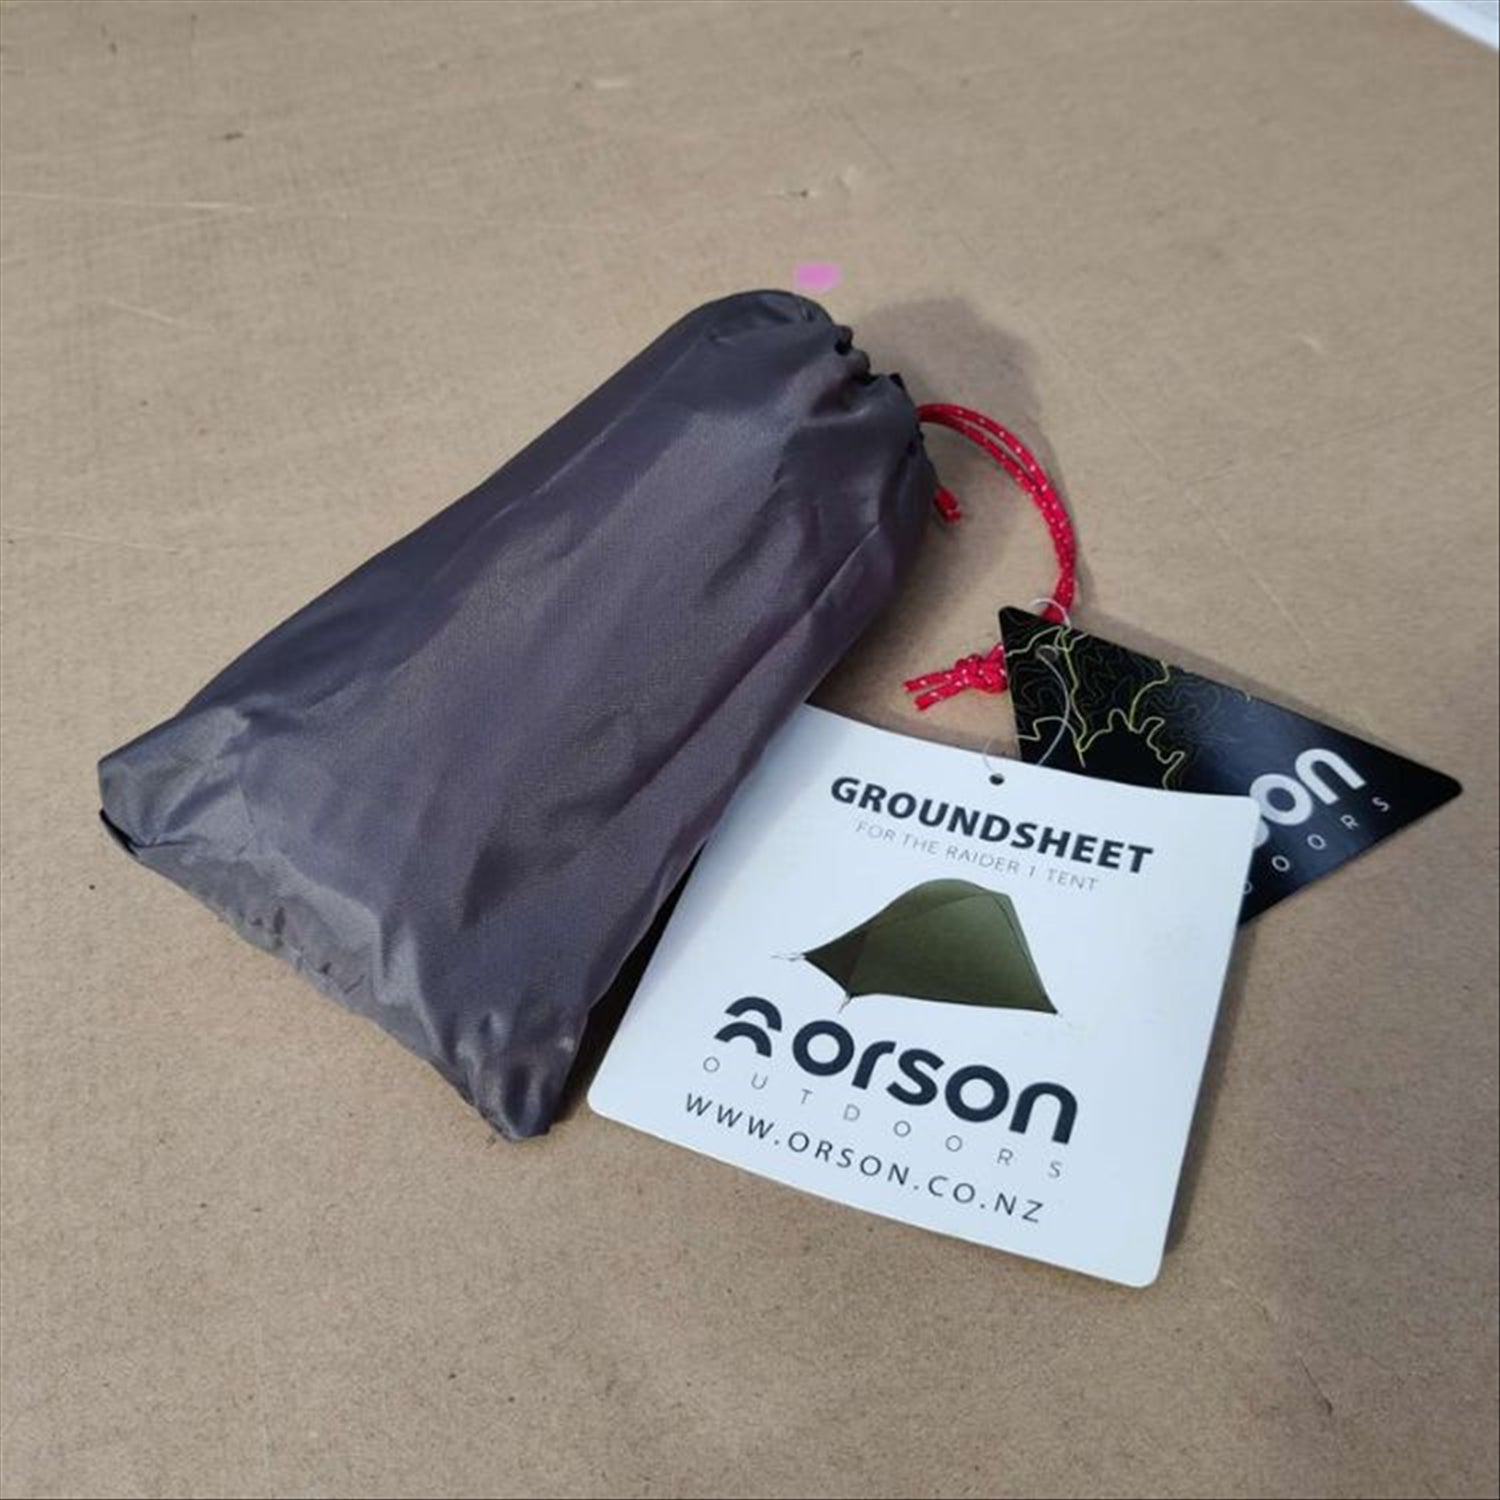 Orson Raider 1XL Tent Groundsheet